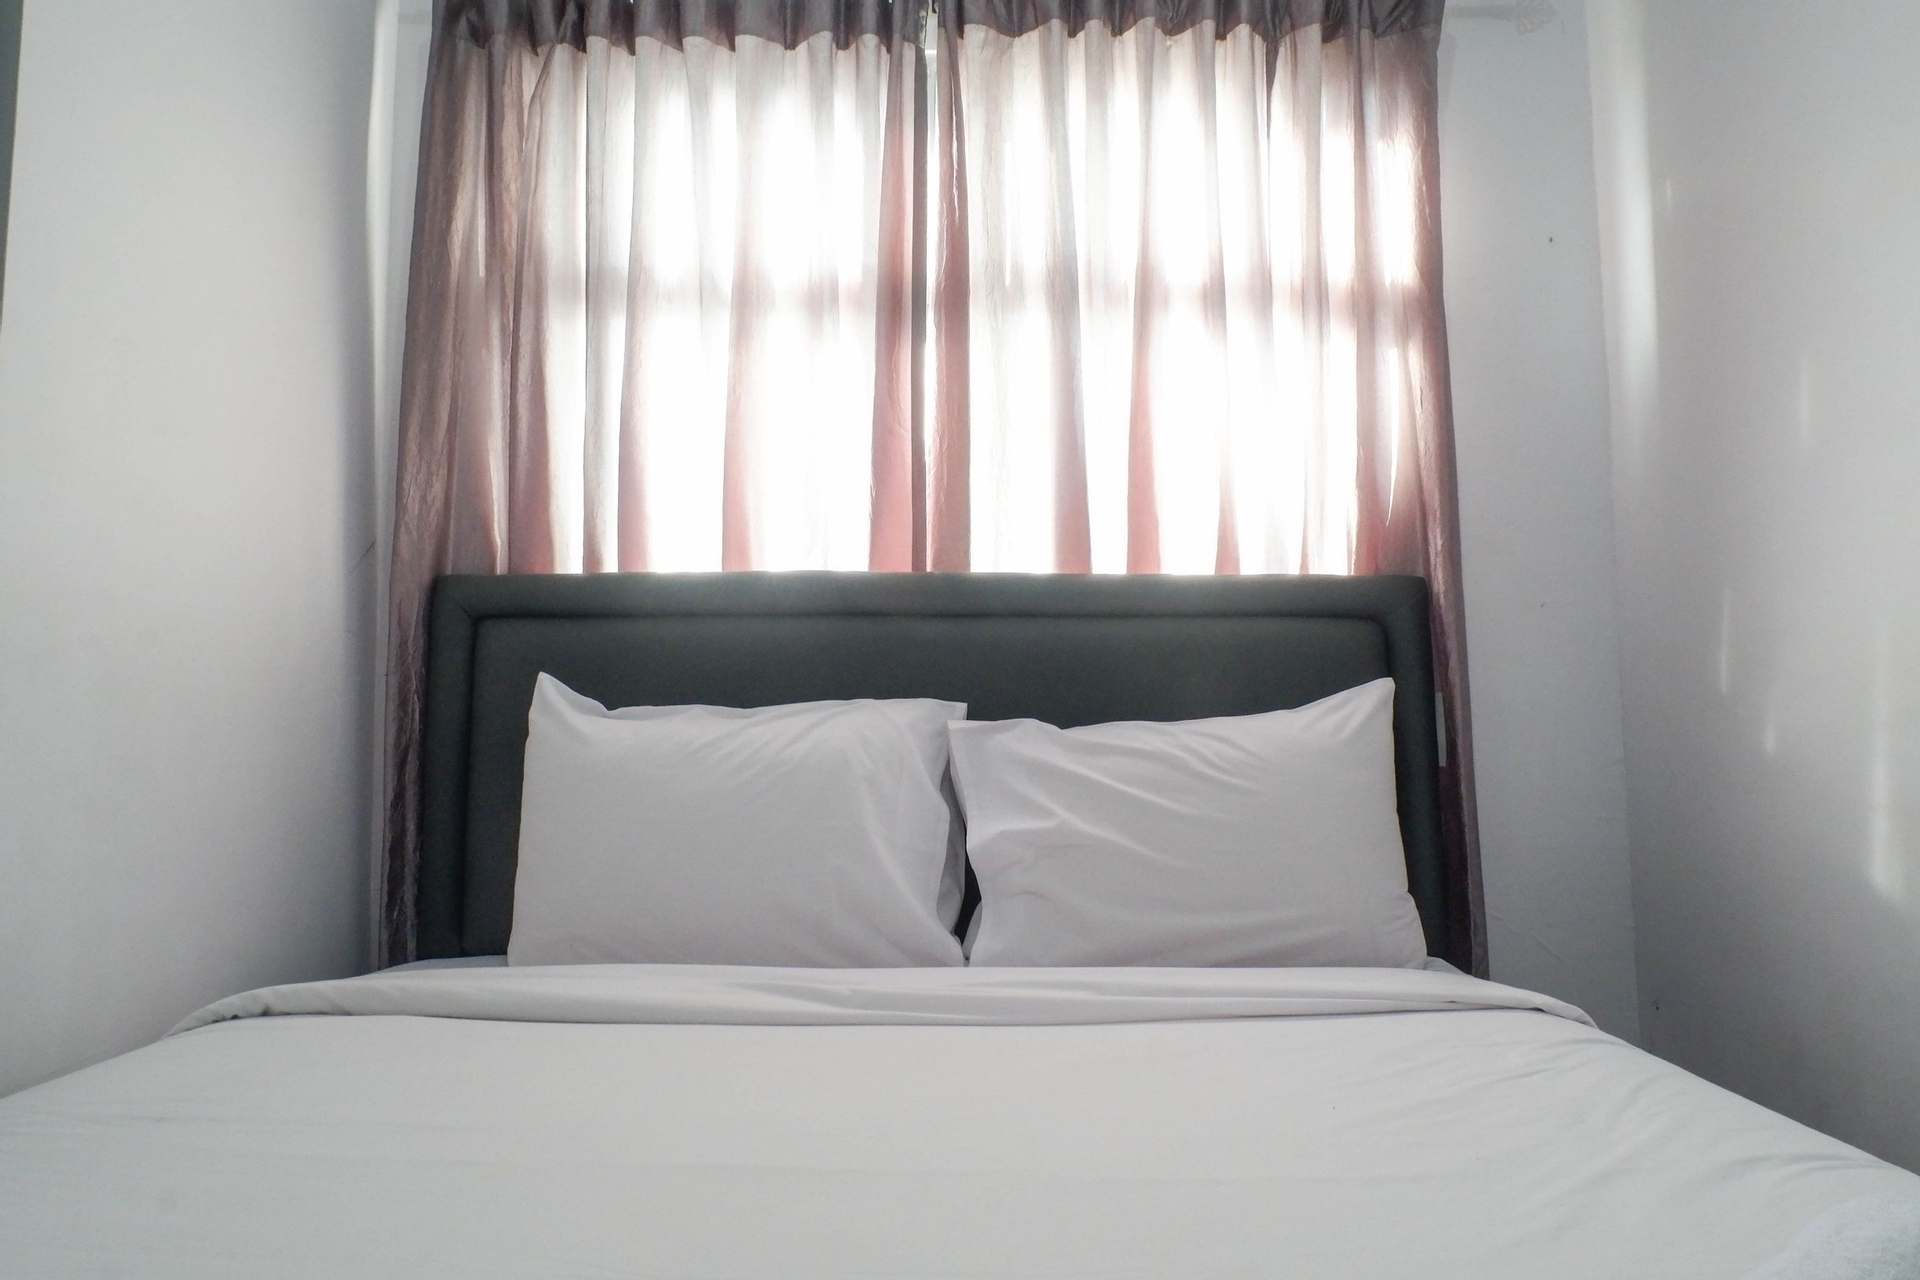 Bedroom 3, Best Deal & Strategic 2BR Apartment at Gunawangsa Merr By Travelio, Surabaya